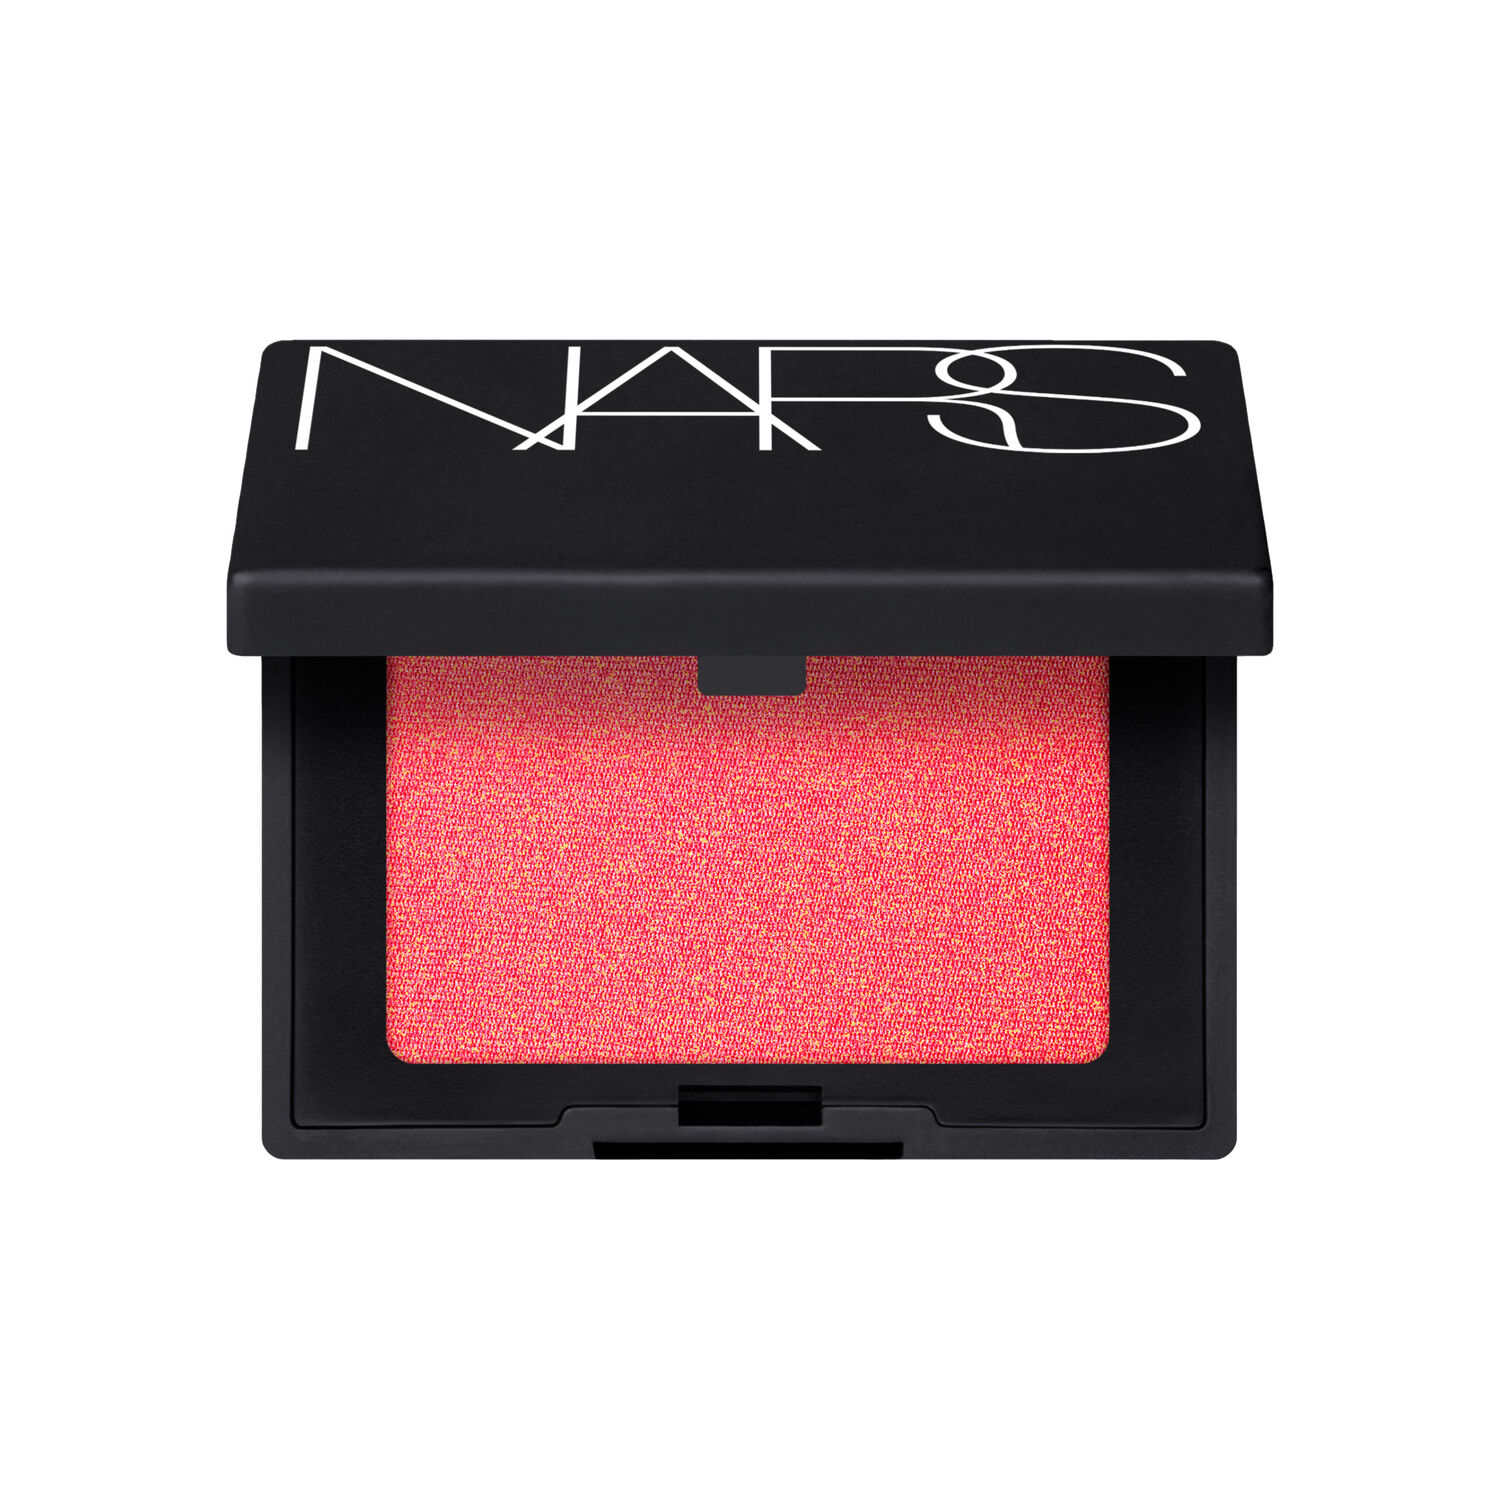 The Best Pink Blush for Every Budget and Skin Tone - Makeup.com - Makeup.com